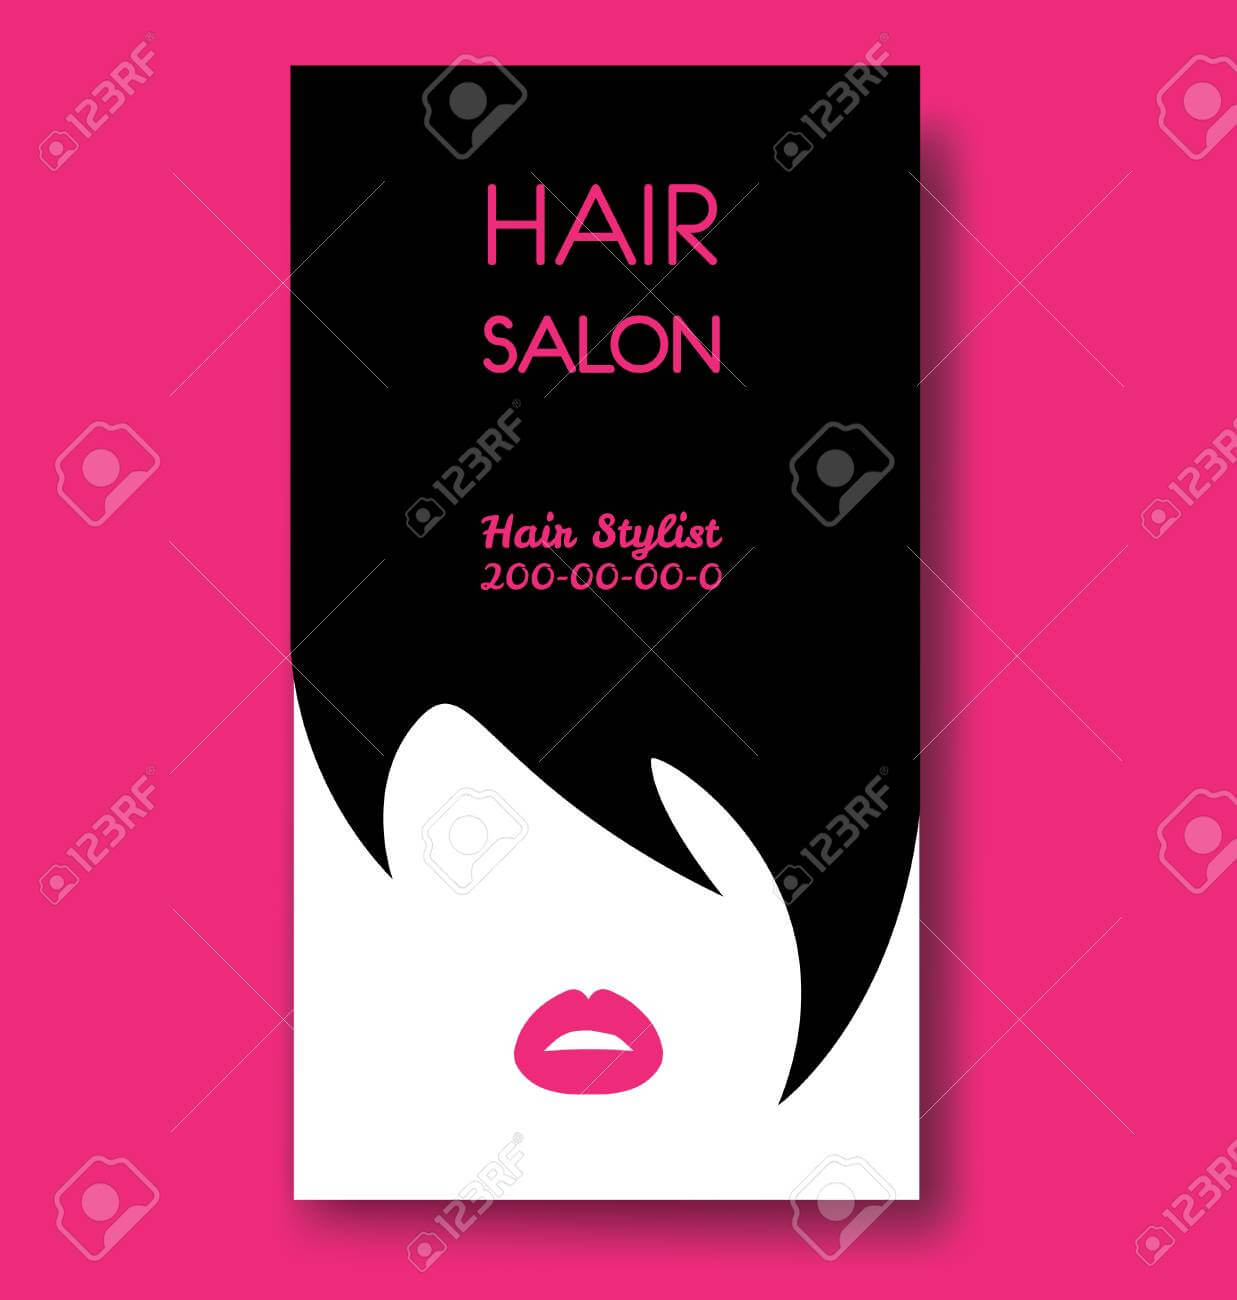 Hair Salon Business Card Templates With Black Hair And Beautiful Throughout Hair Salon Business Card Template